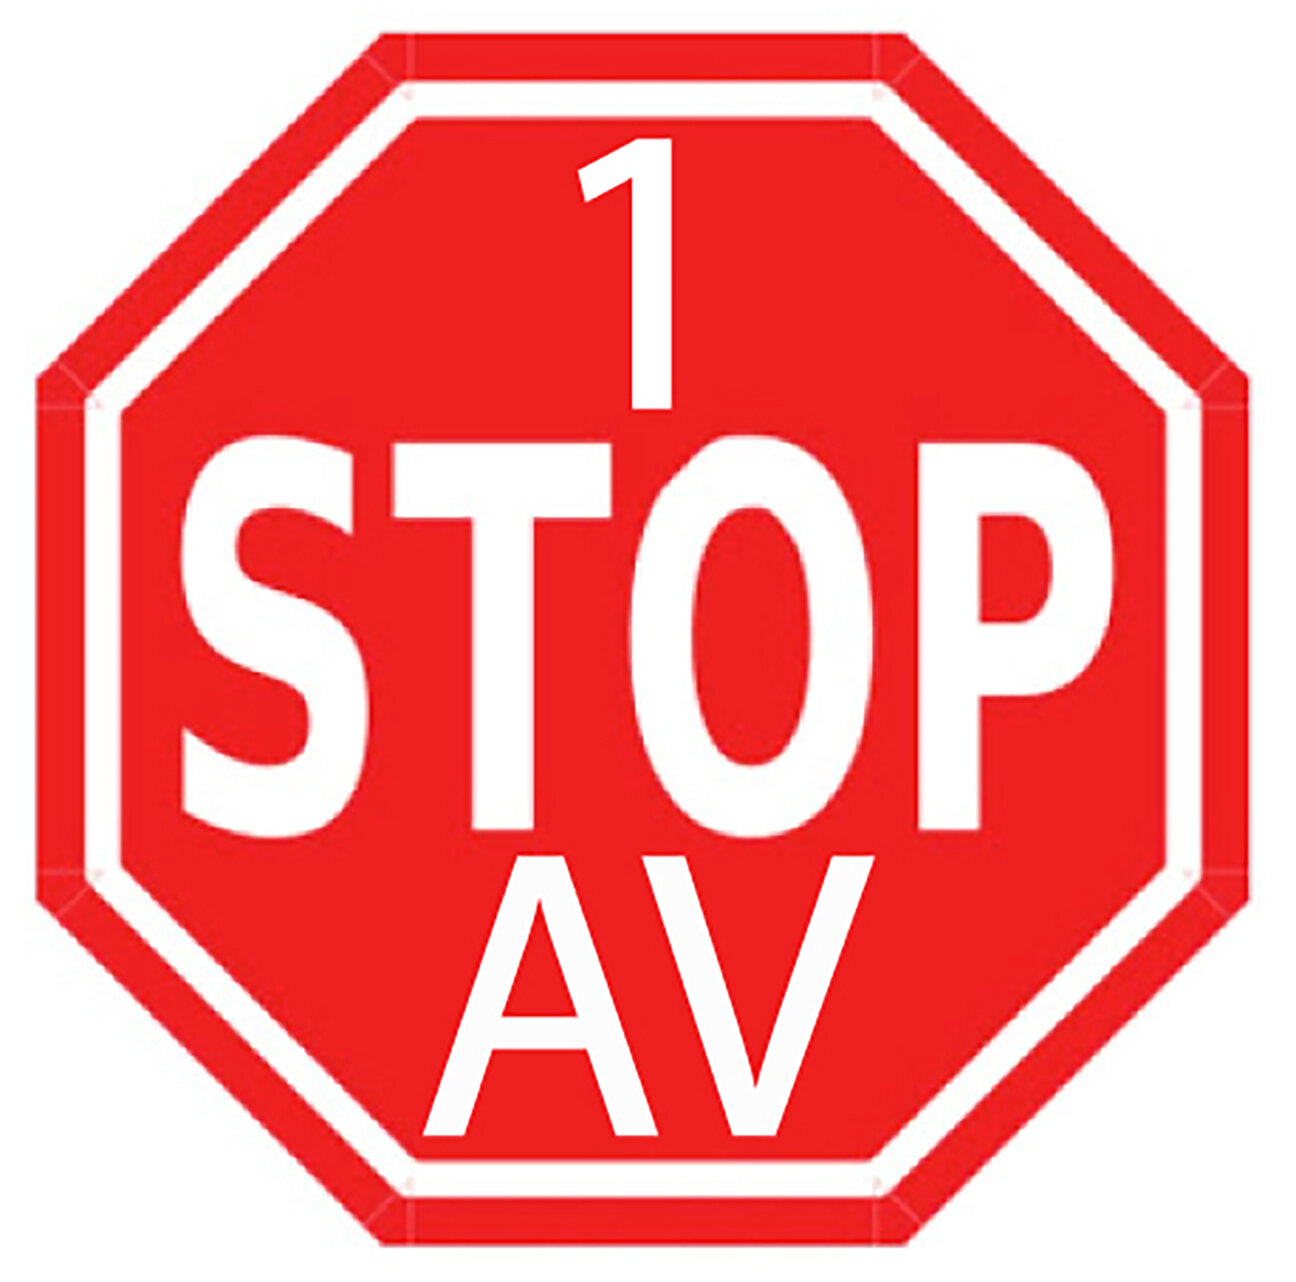 1 STOP  AV